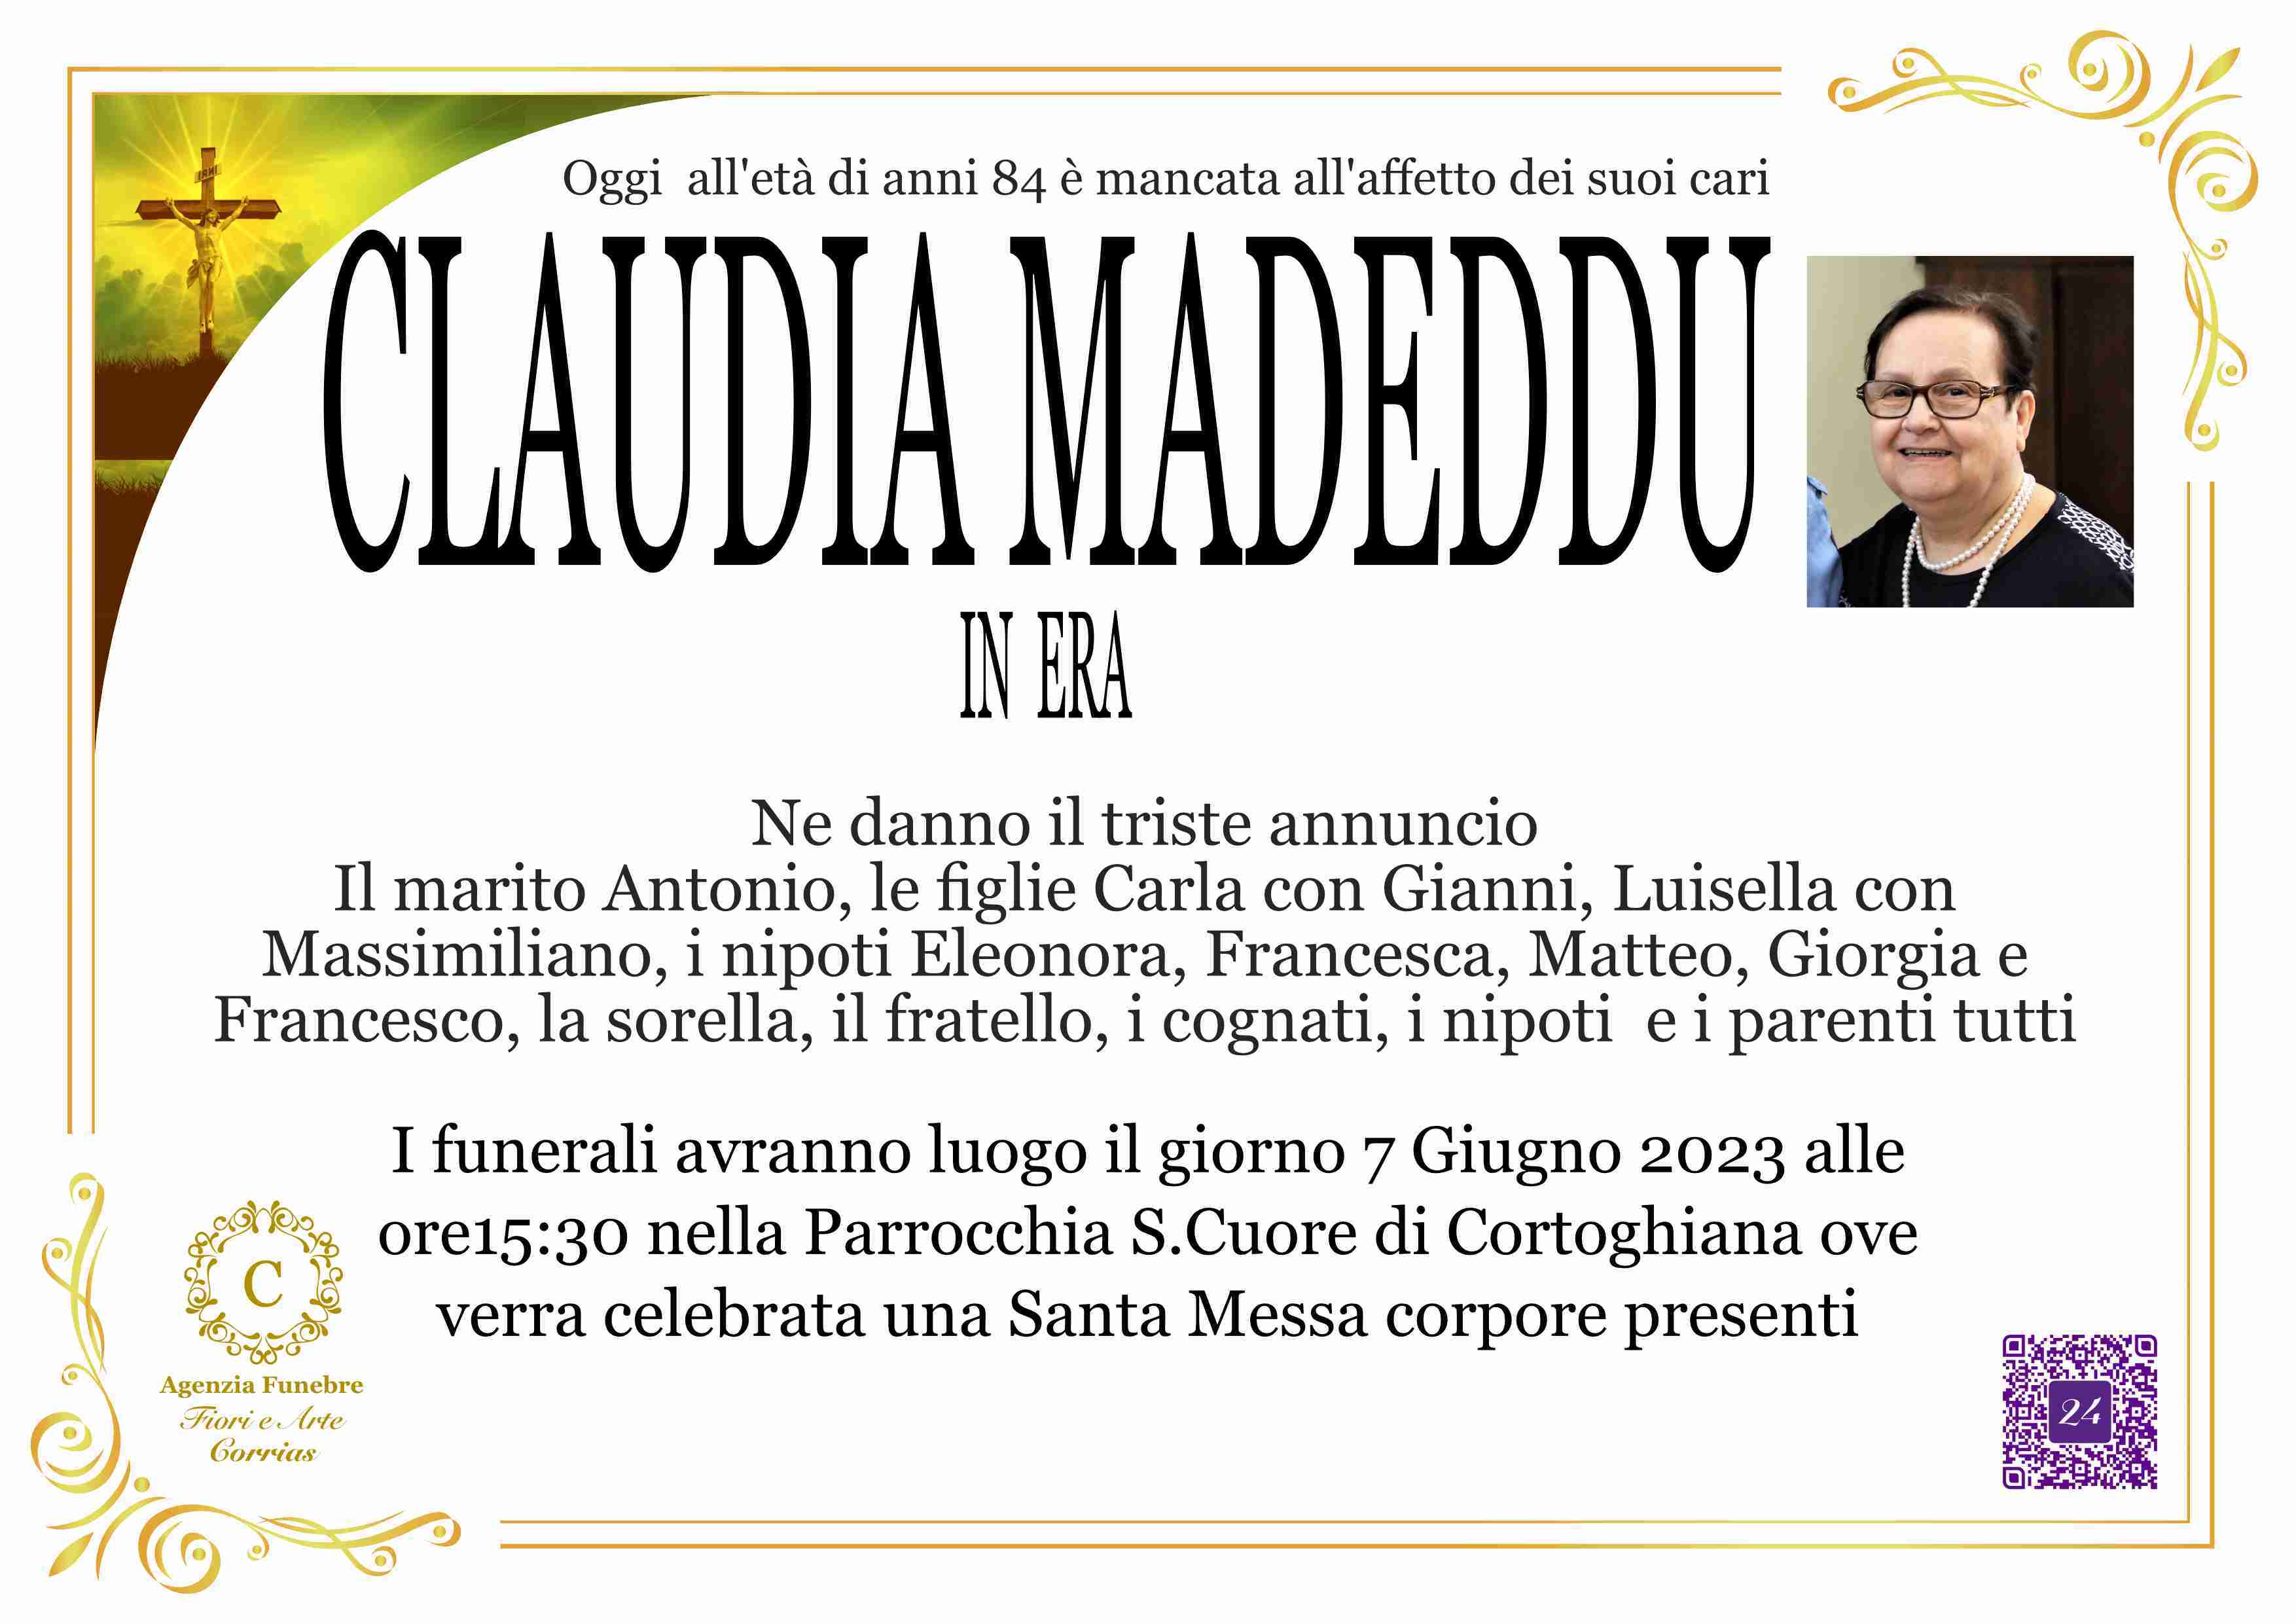 Claudia Madeddu